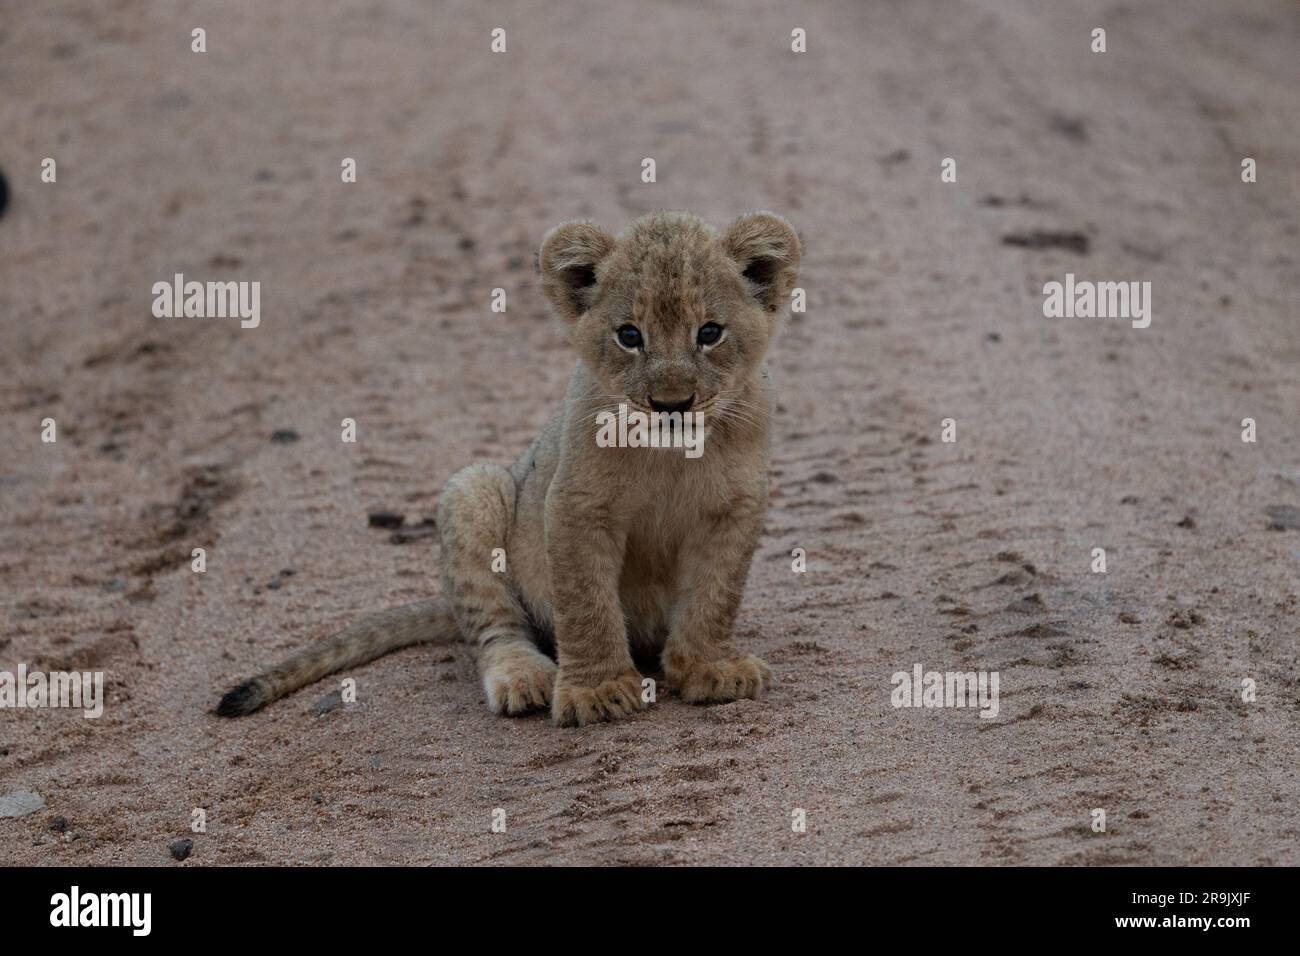 A lion cub, Panthera leo, sitting on the ground, direct gaze. Stock Photo